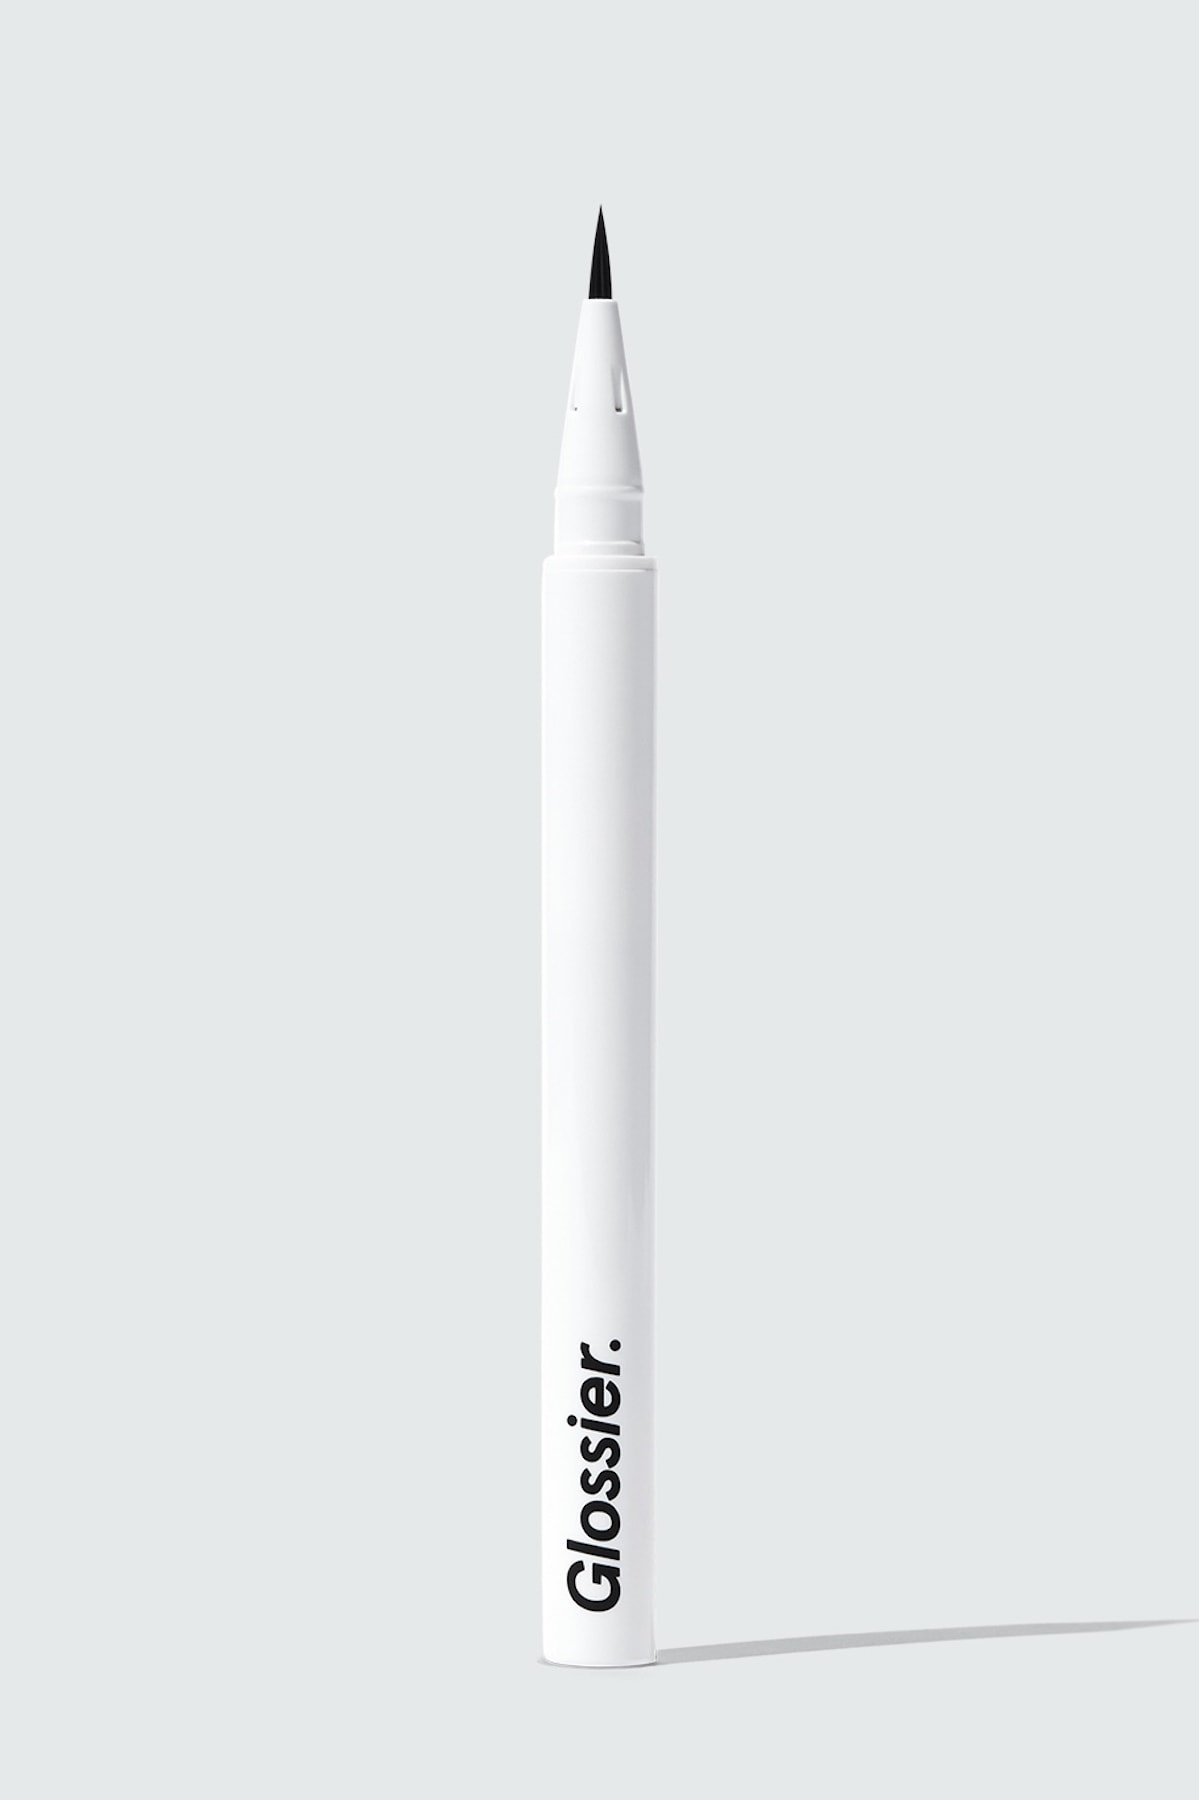 Glossier Brow Flick Eyebrow Pen Product Release 